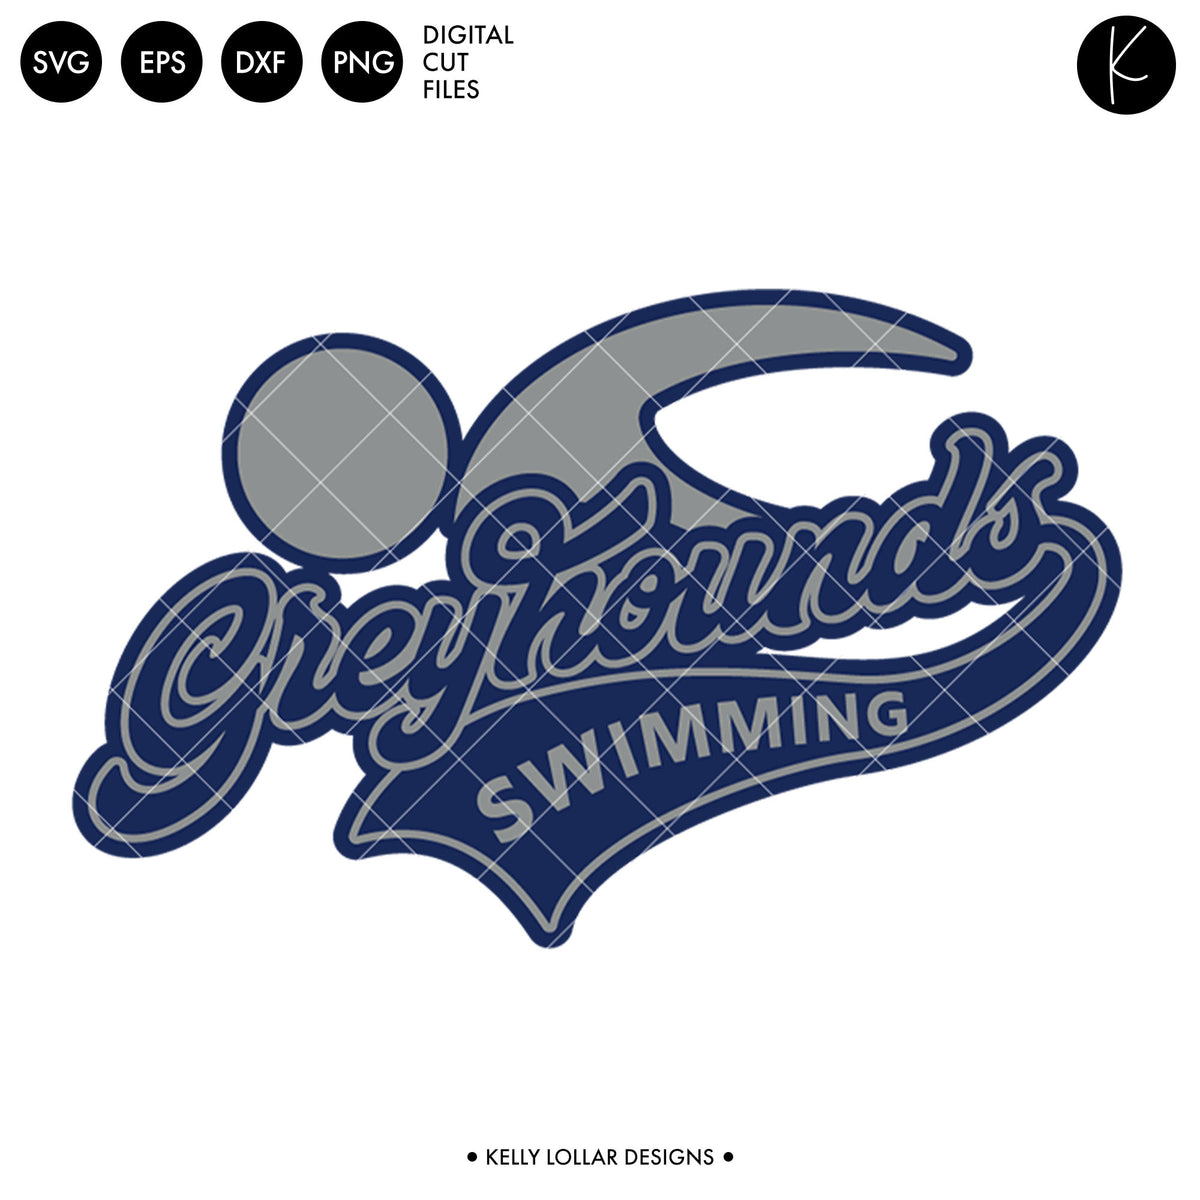 Greyhounds Swim Bundle | SVG DXF EPS PNG Cut Files